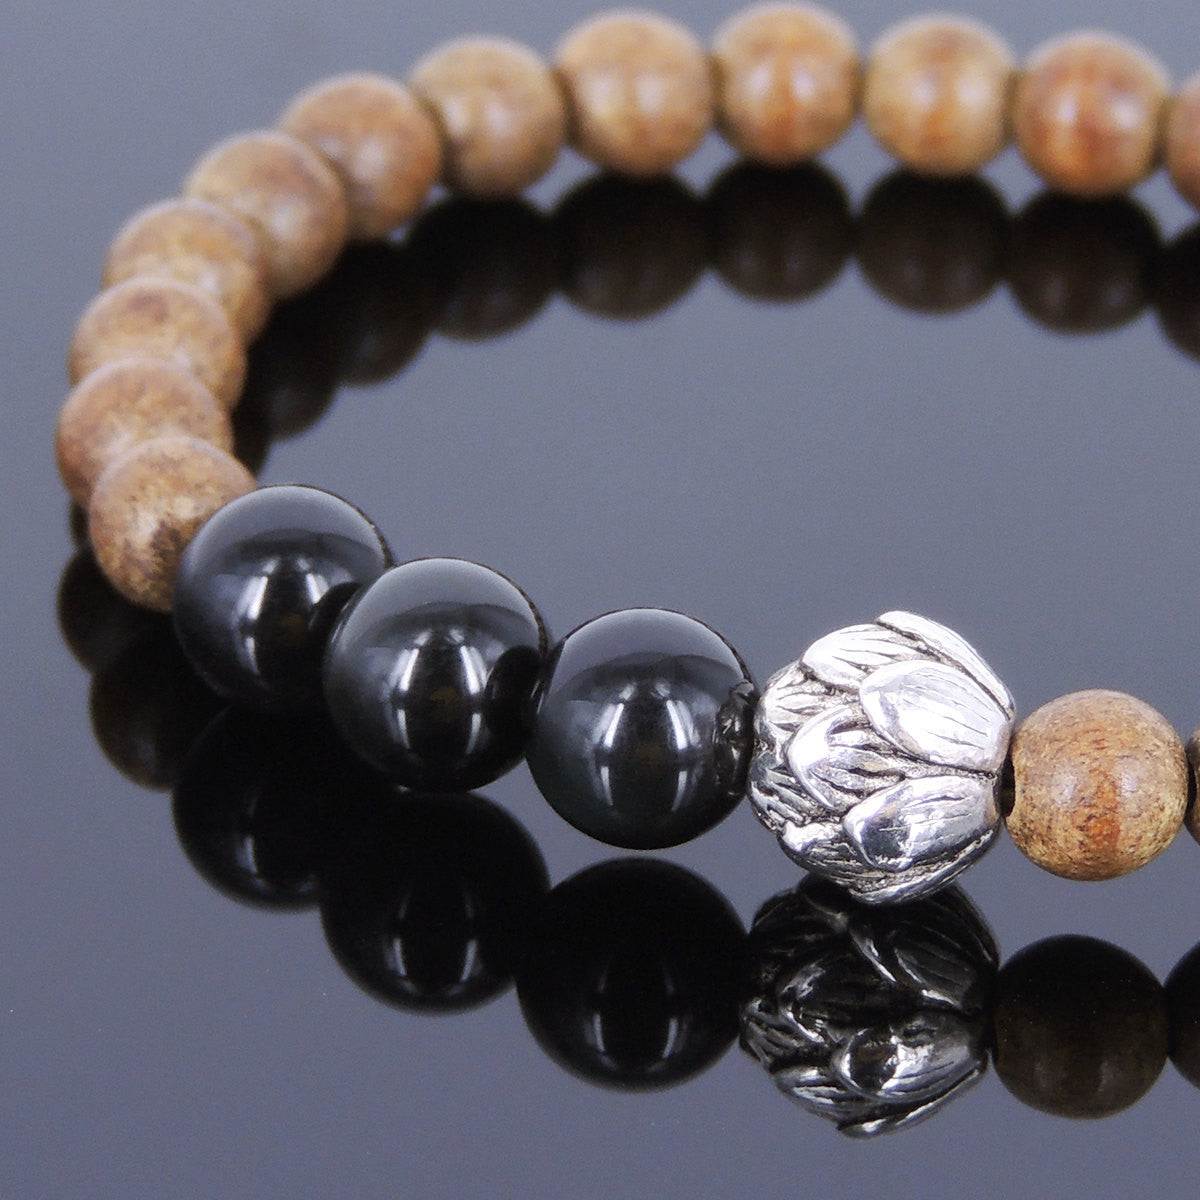 Rainbow Black Obsidian & Agarwood Bracelet for Prayer & Meditation with Tibetan Silver Lotus Protection Bead - Handmade by Gem & Silver AWB028